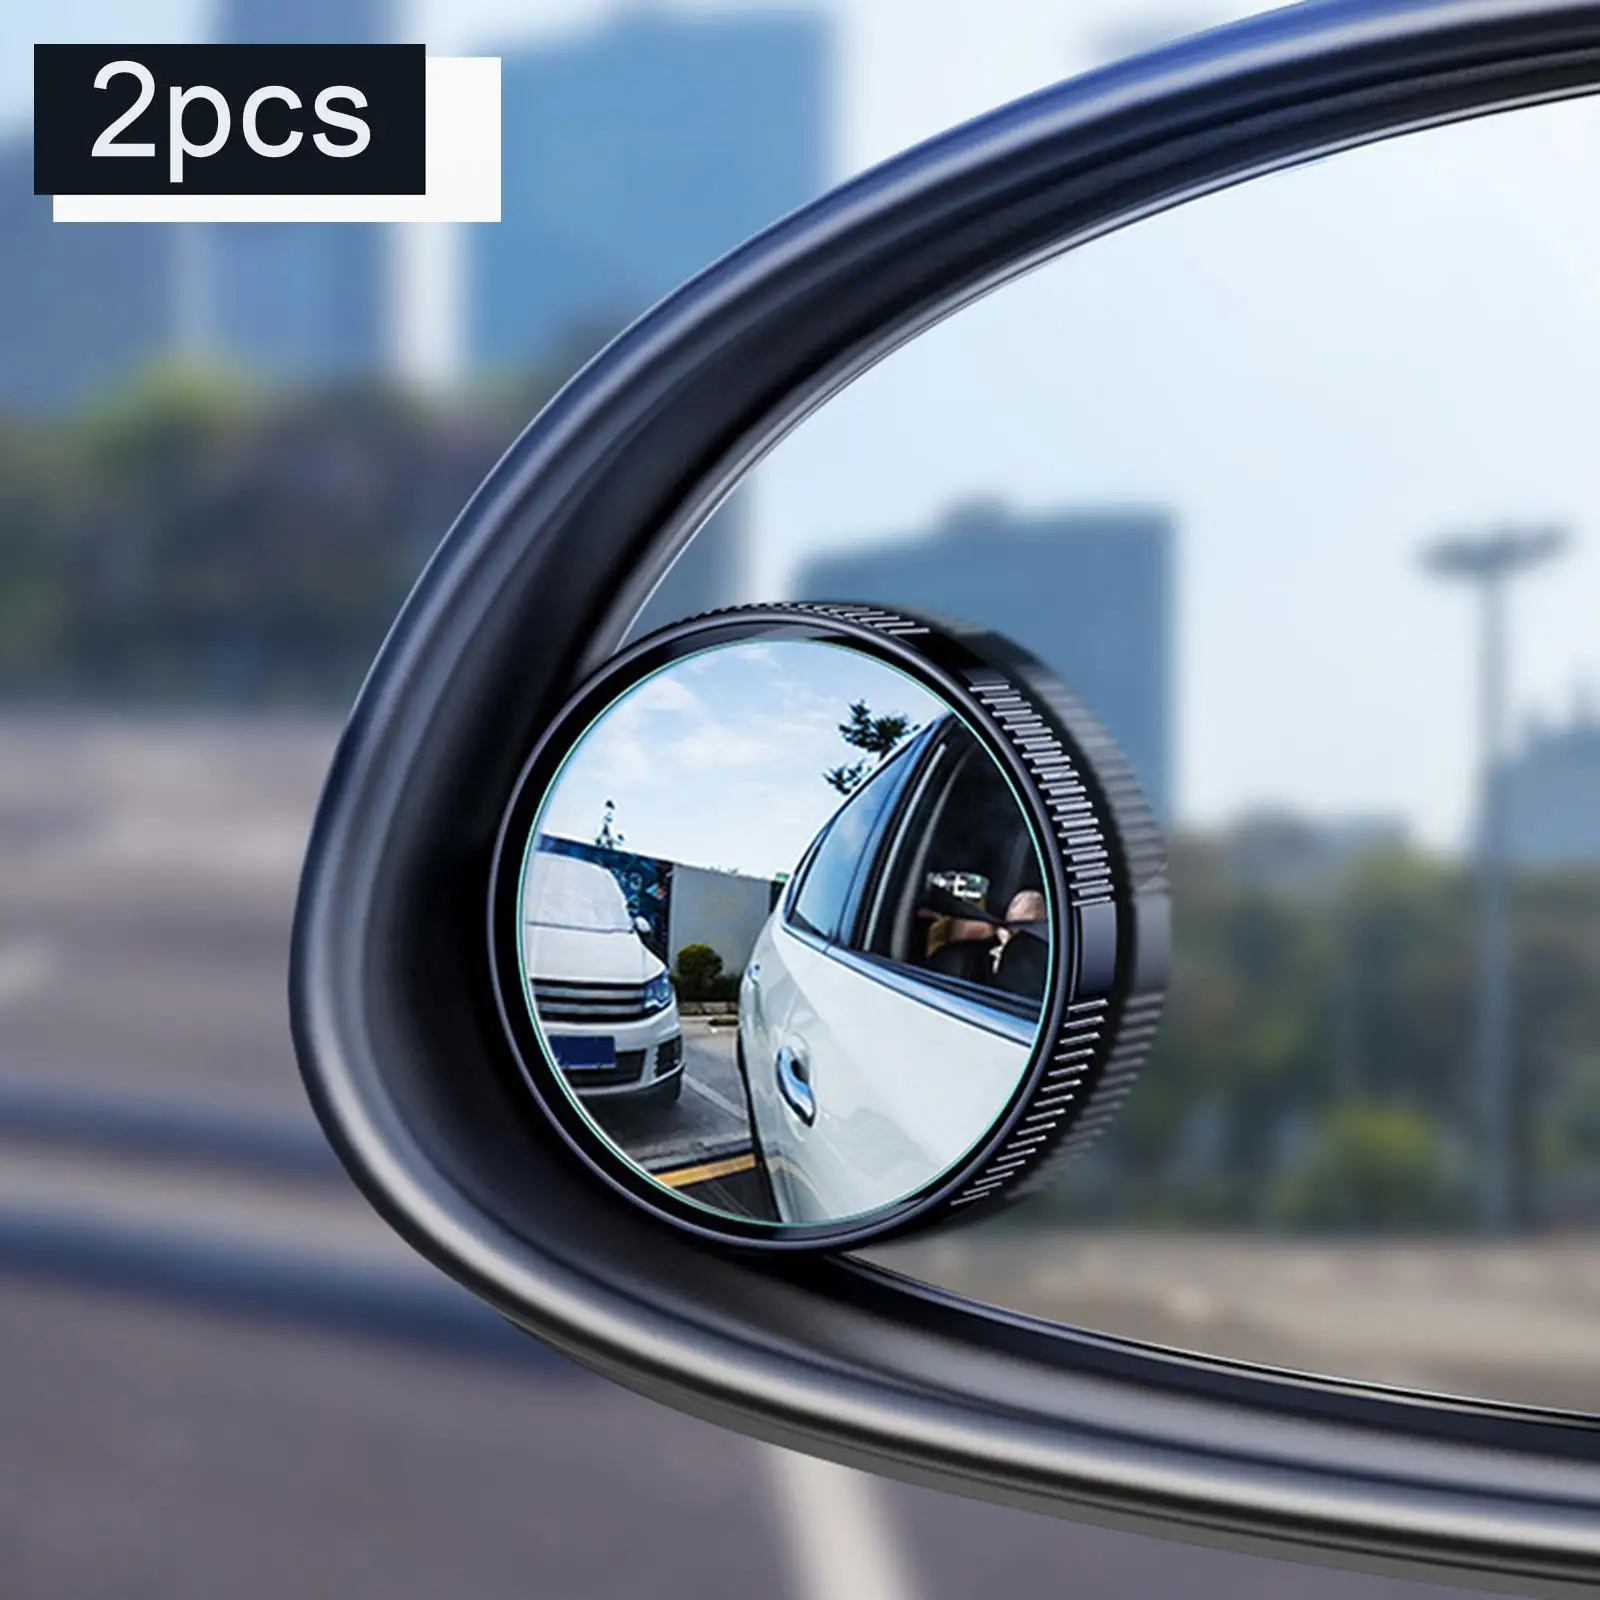 2Pcs Round Spot Mirrors Convex Mirror for Cars SUV Accessories